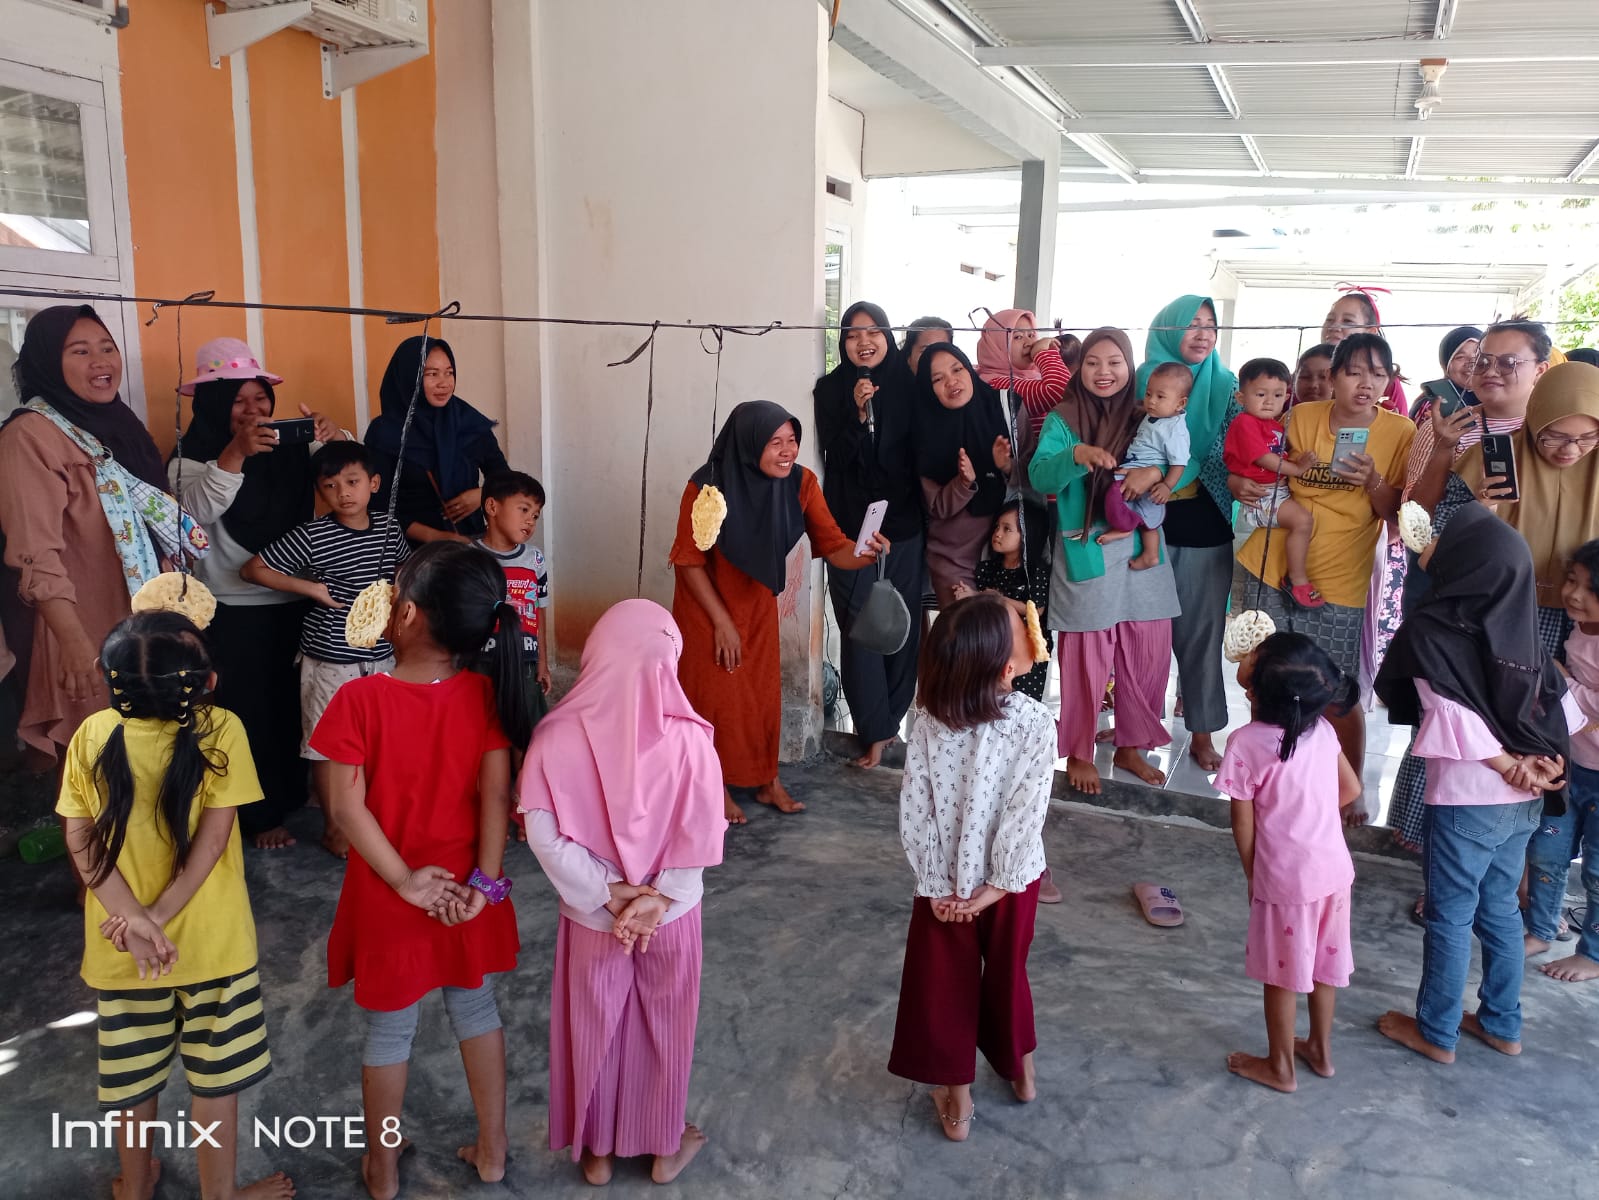 Meriahnya Perayaan HUT RI Ala Perumahan Taman Bentiring Kota Bengkulu